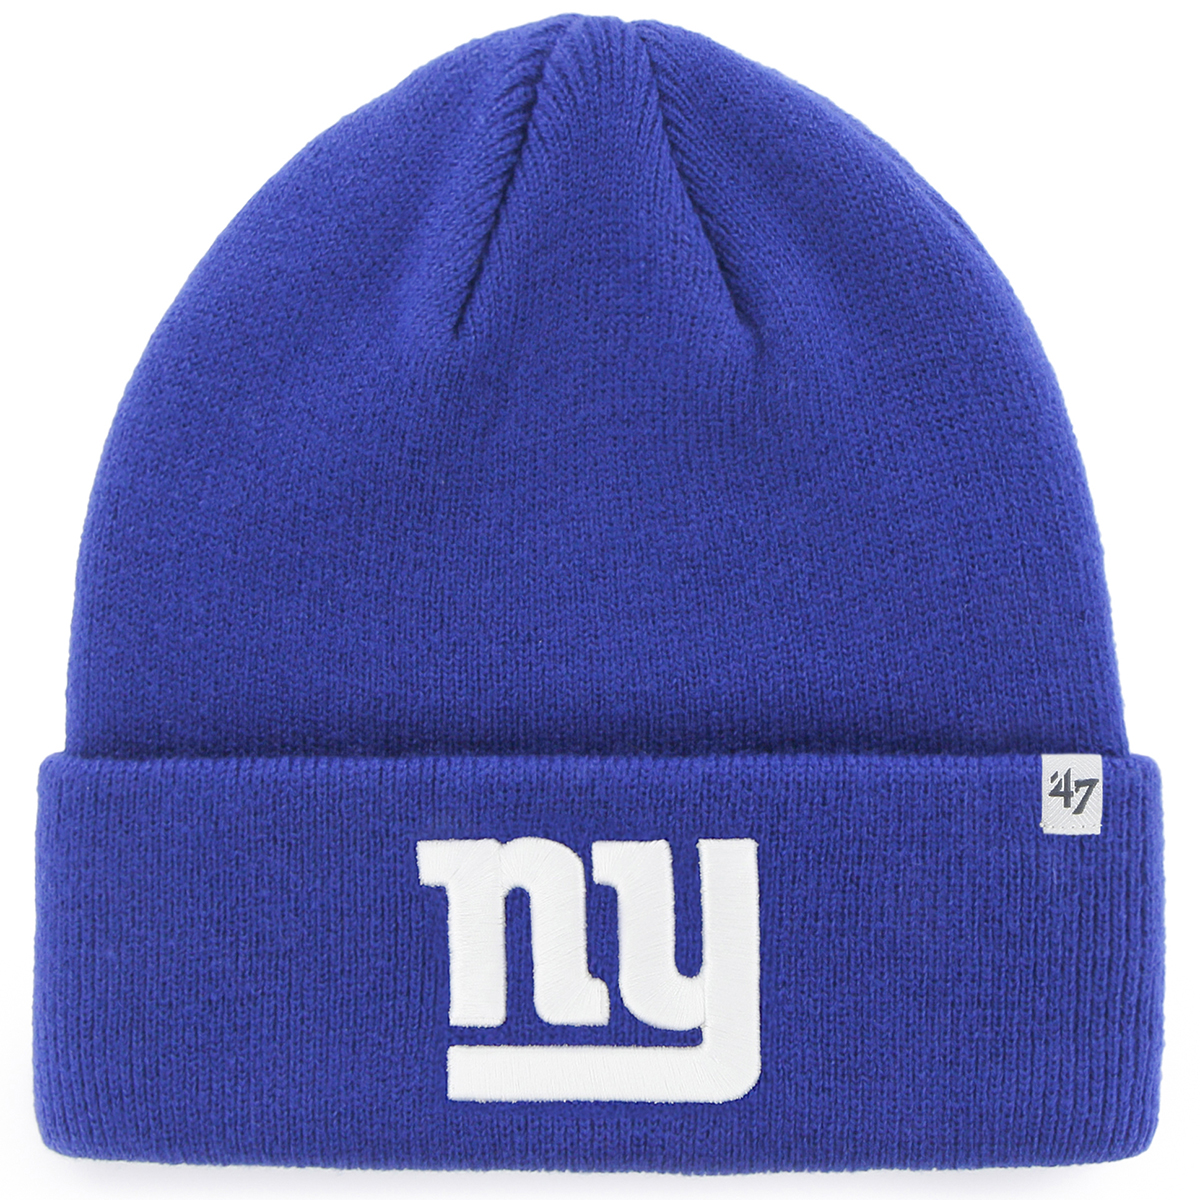 New York Giants '47 Cuff Knit Hat